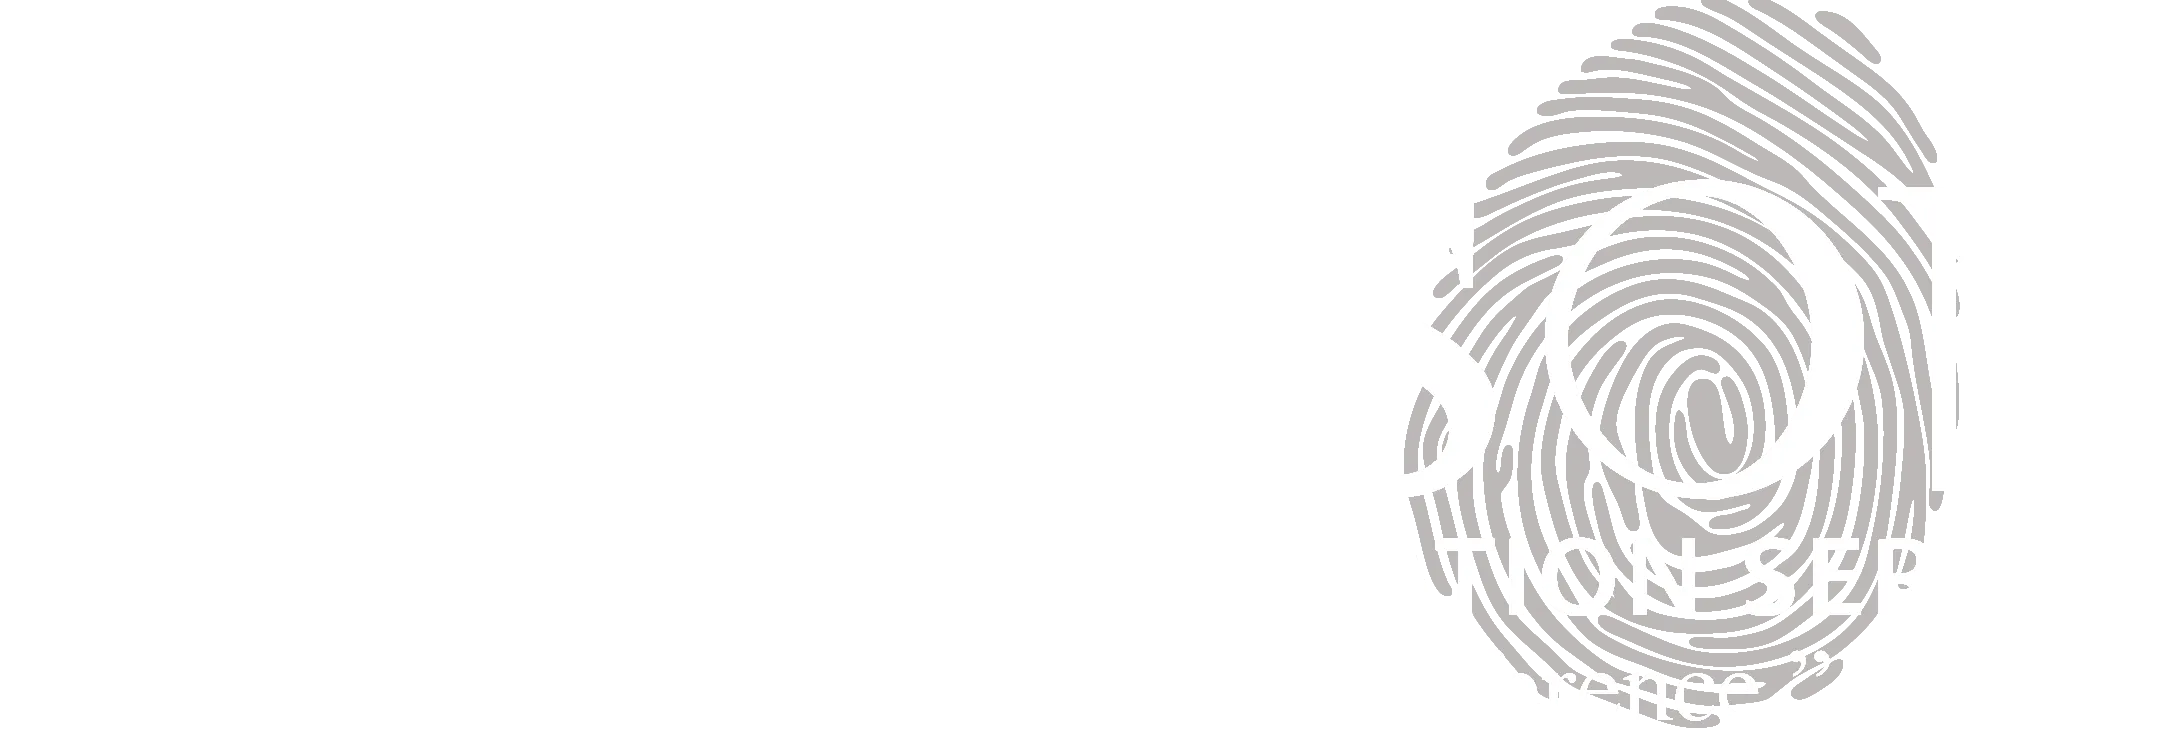 Mattson Funeral Home & Cremation Service Logo